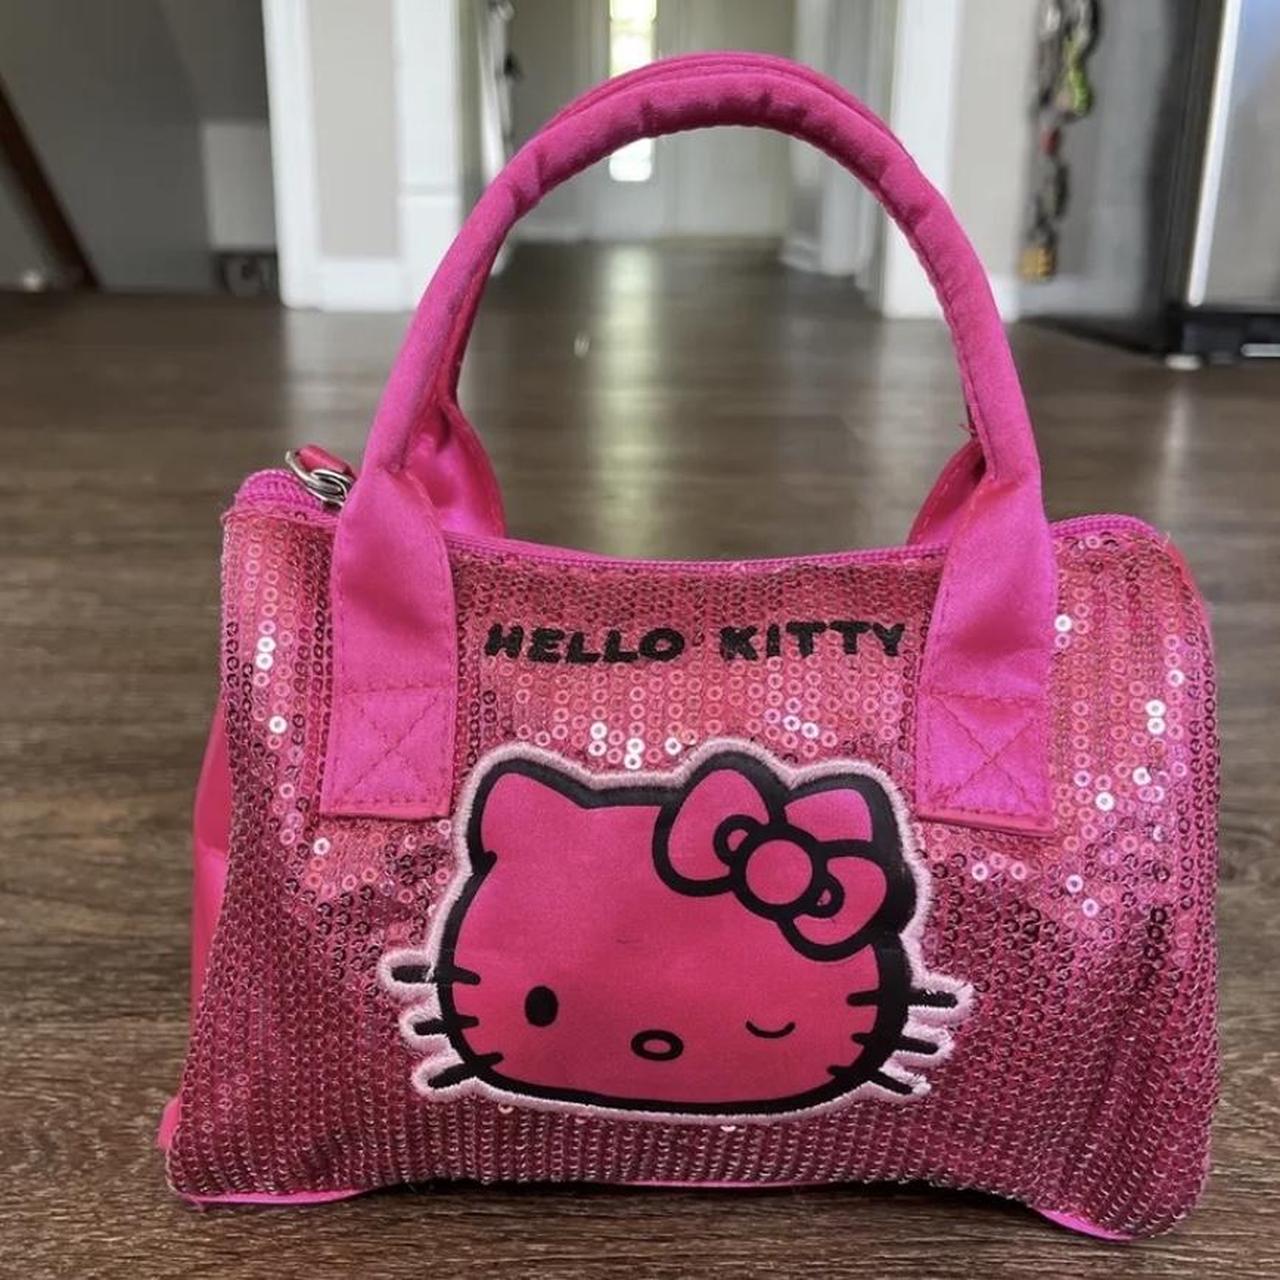 brand new sanrio hello kitty coin purse 💗 -has a... - Depop